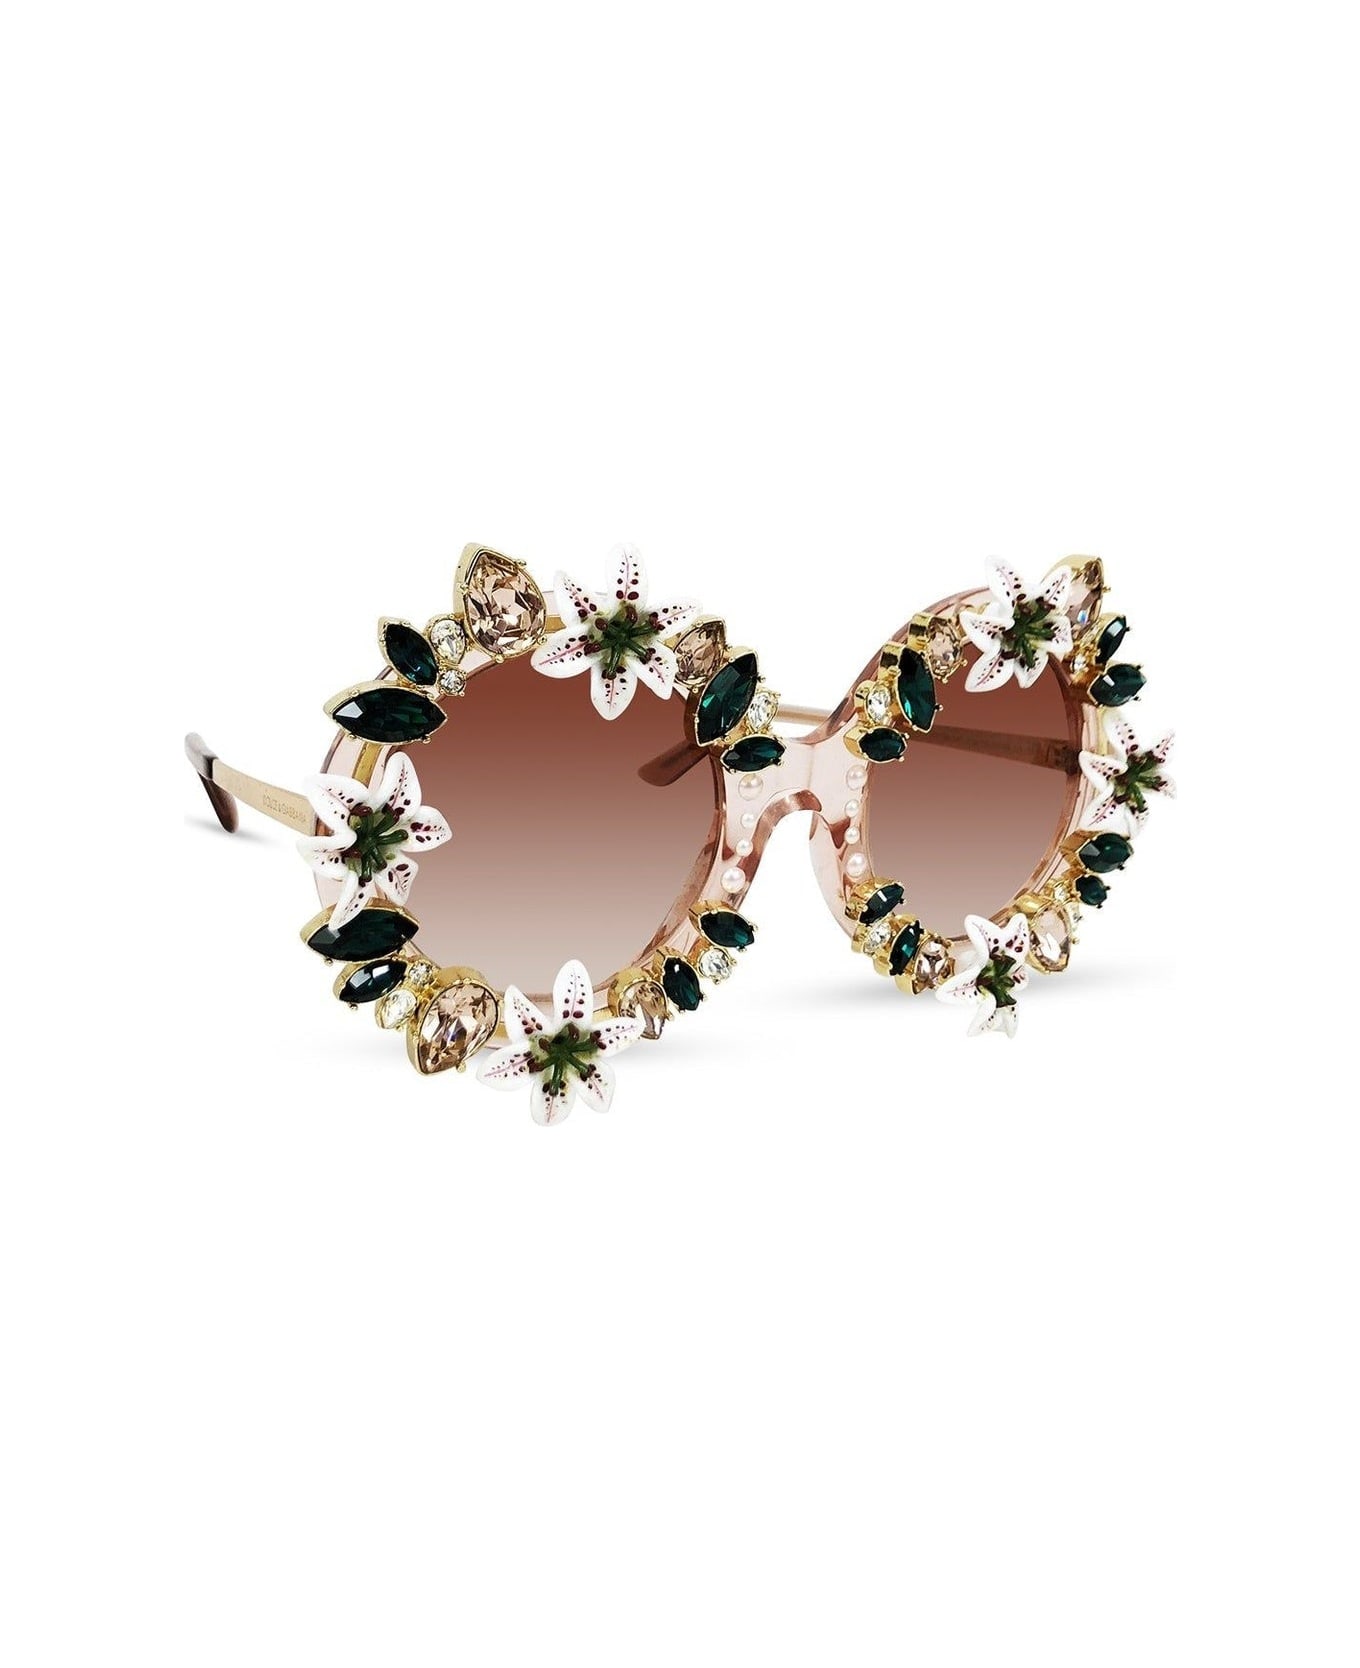 Dolce & Gabbana Crystal Sunglasses - Pink